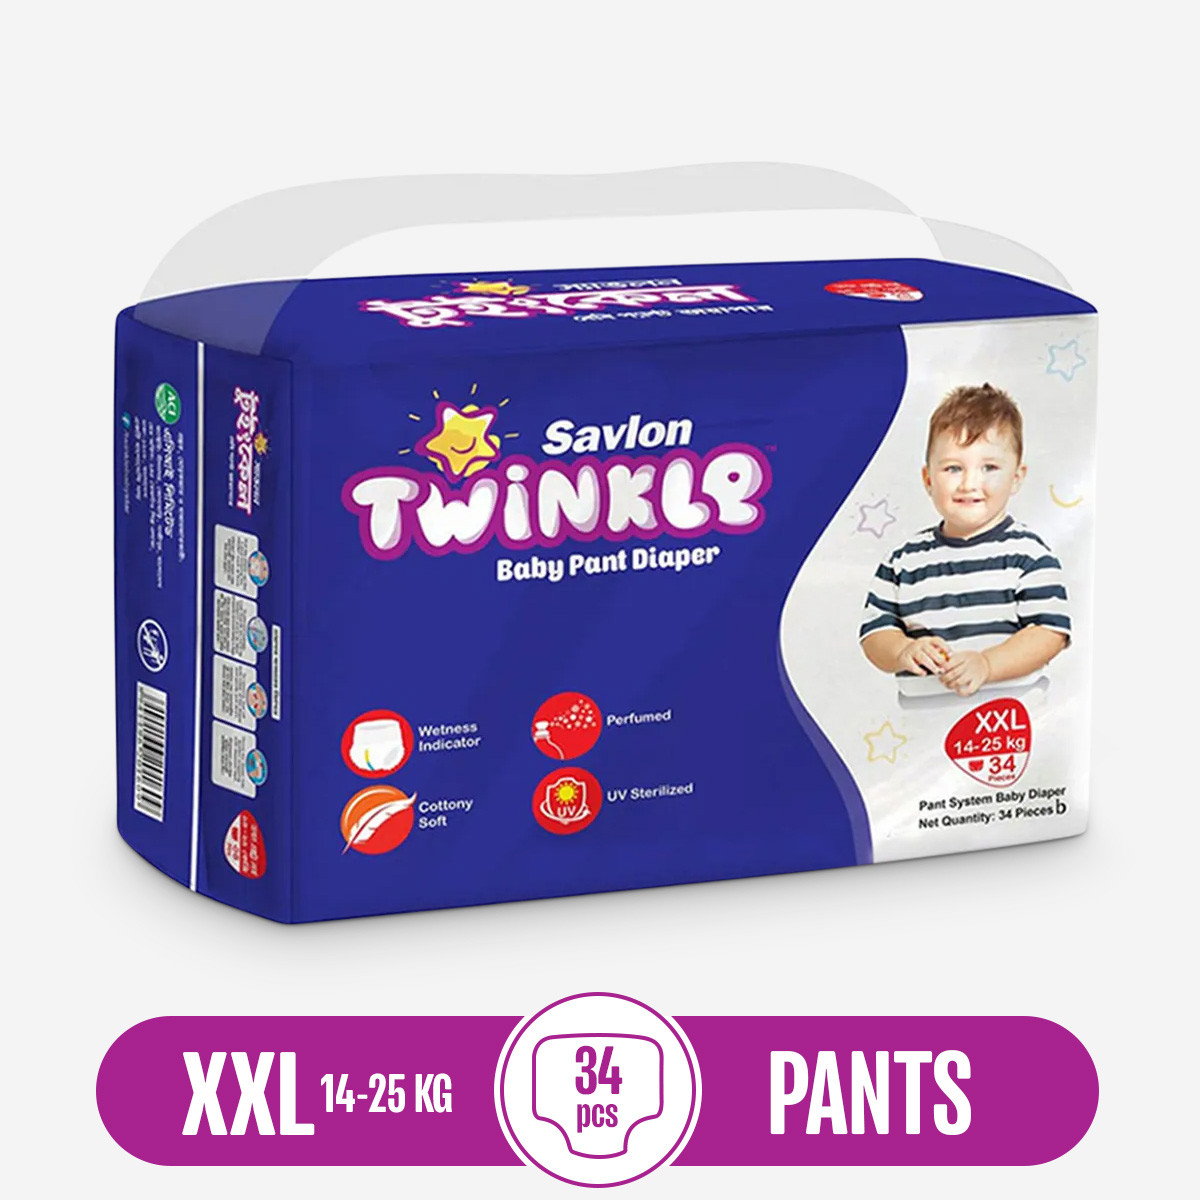 Savlon Twinkle Baby Pant Diaper XXL 34 Pieces